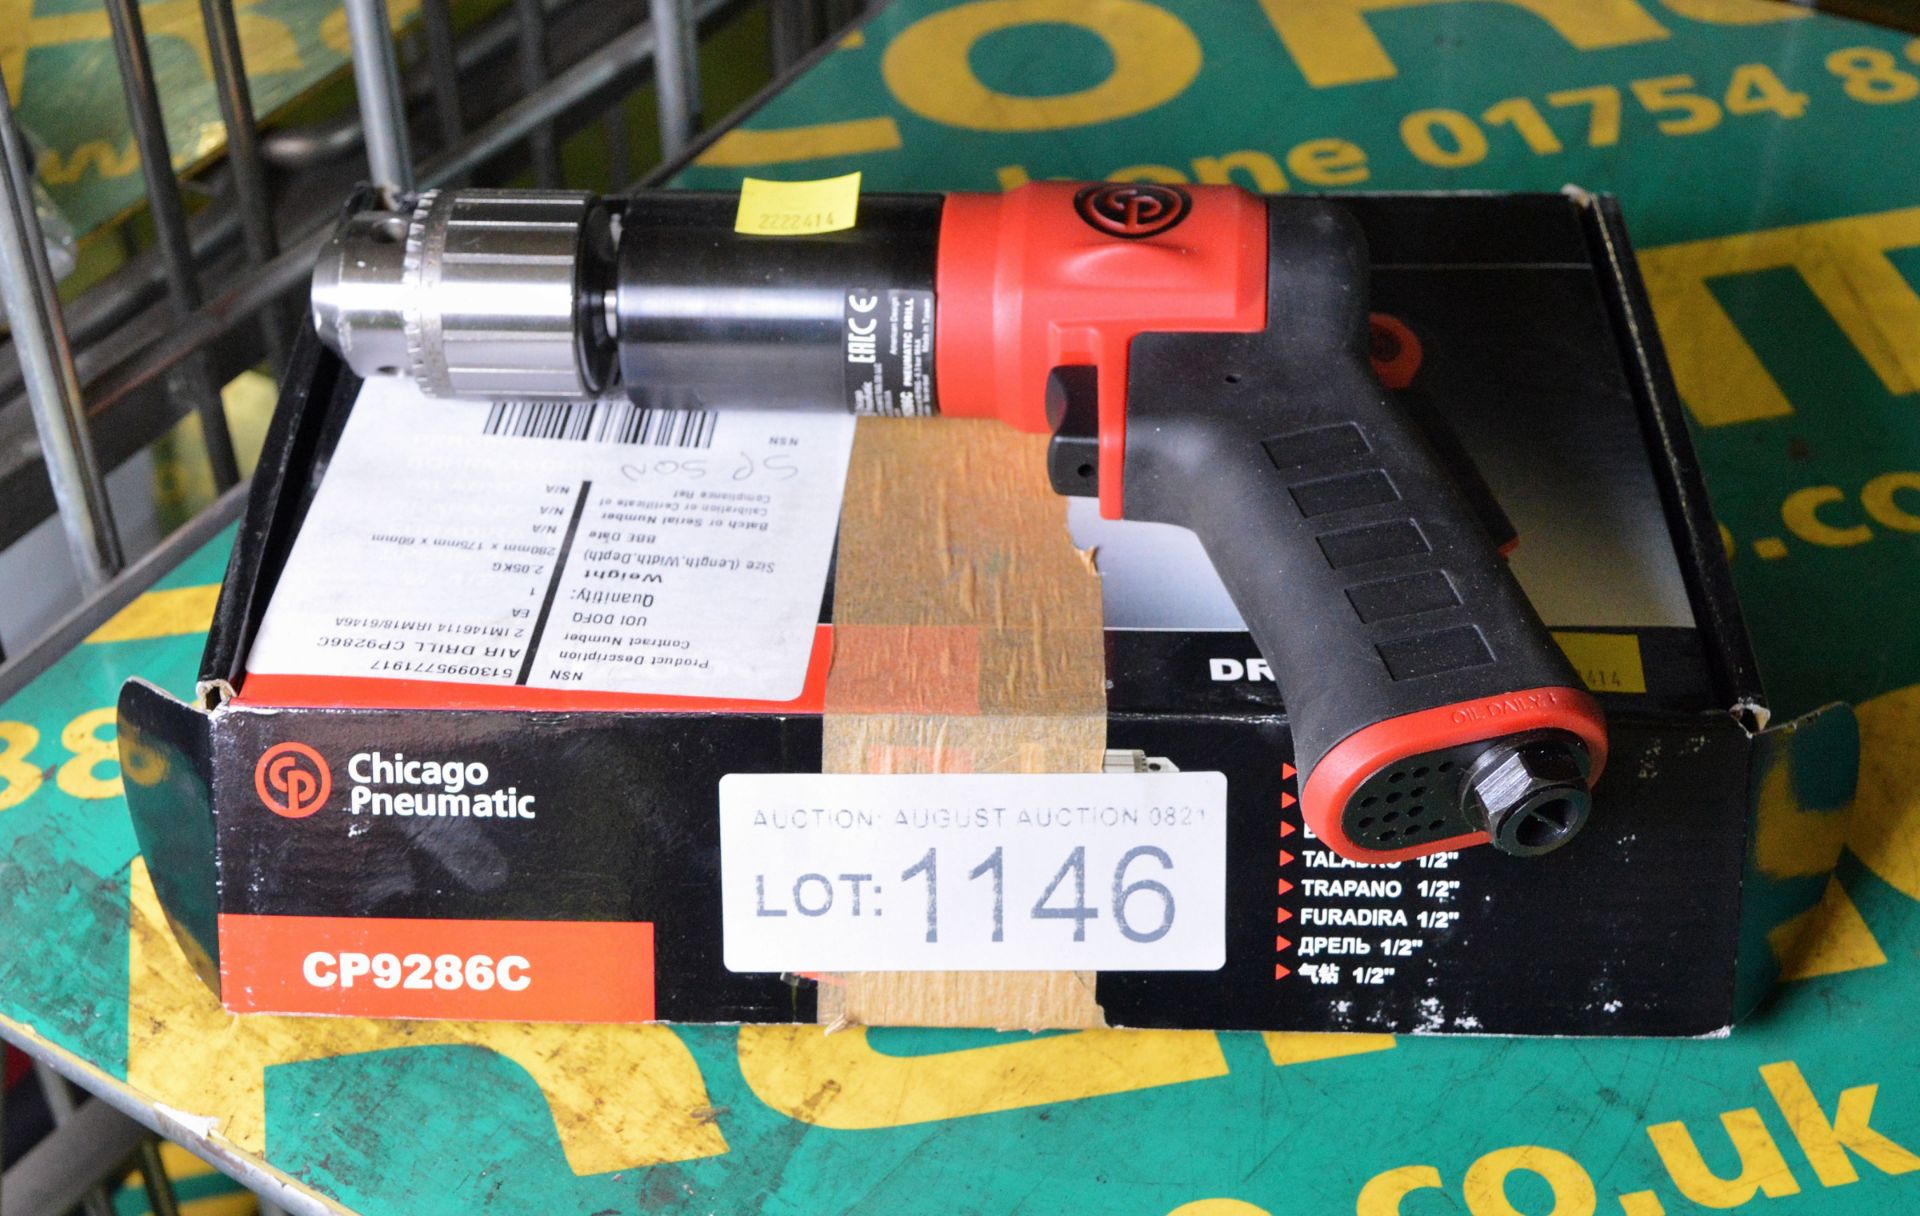 CP CP9286C 1/2 inch Key Pneumatic Drill